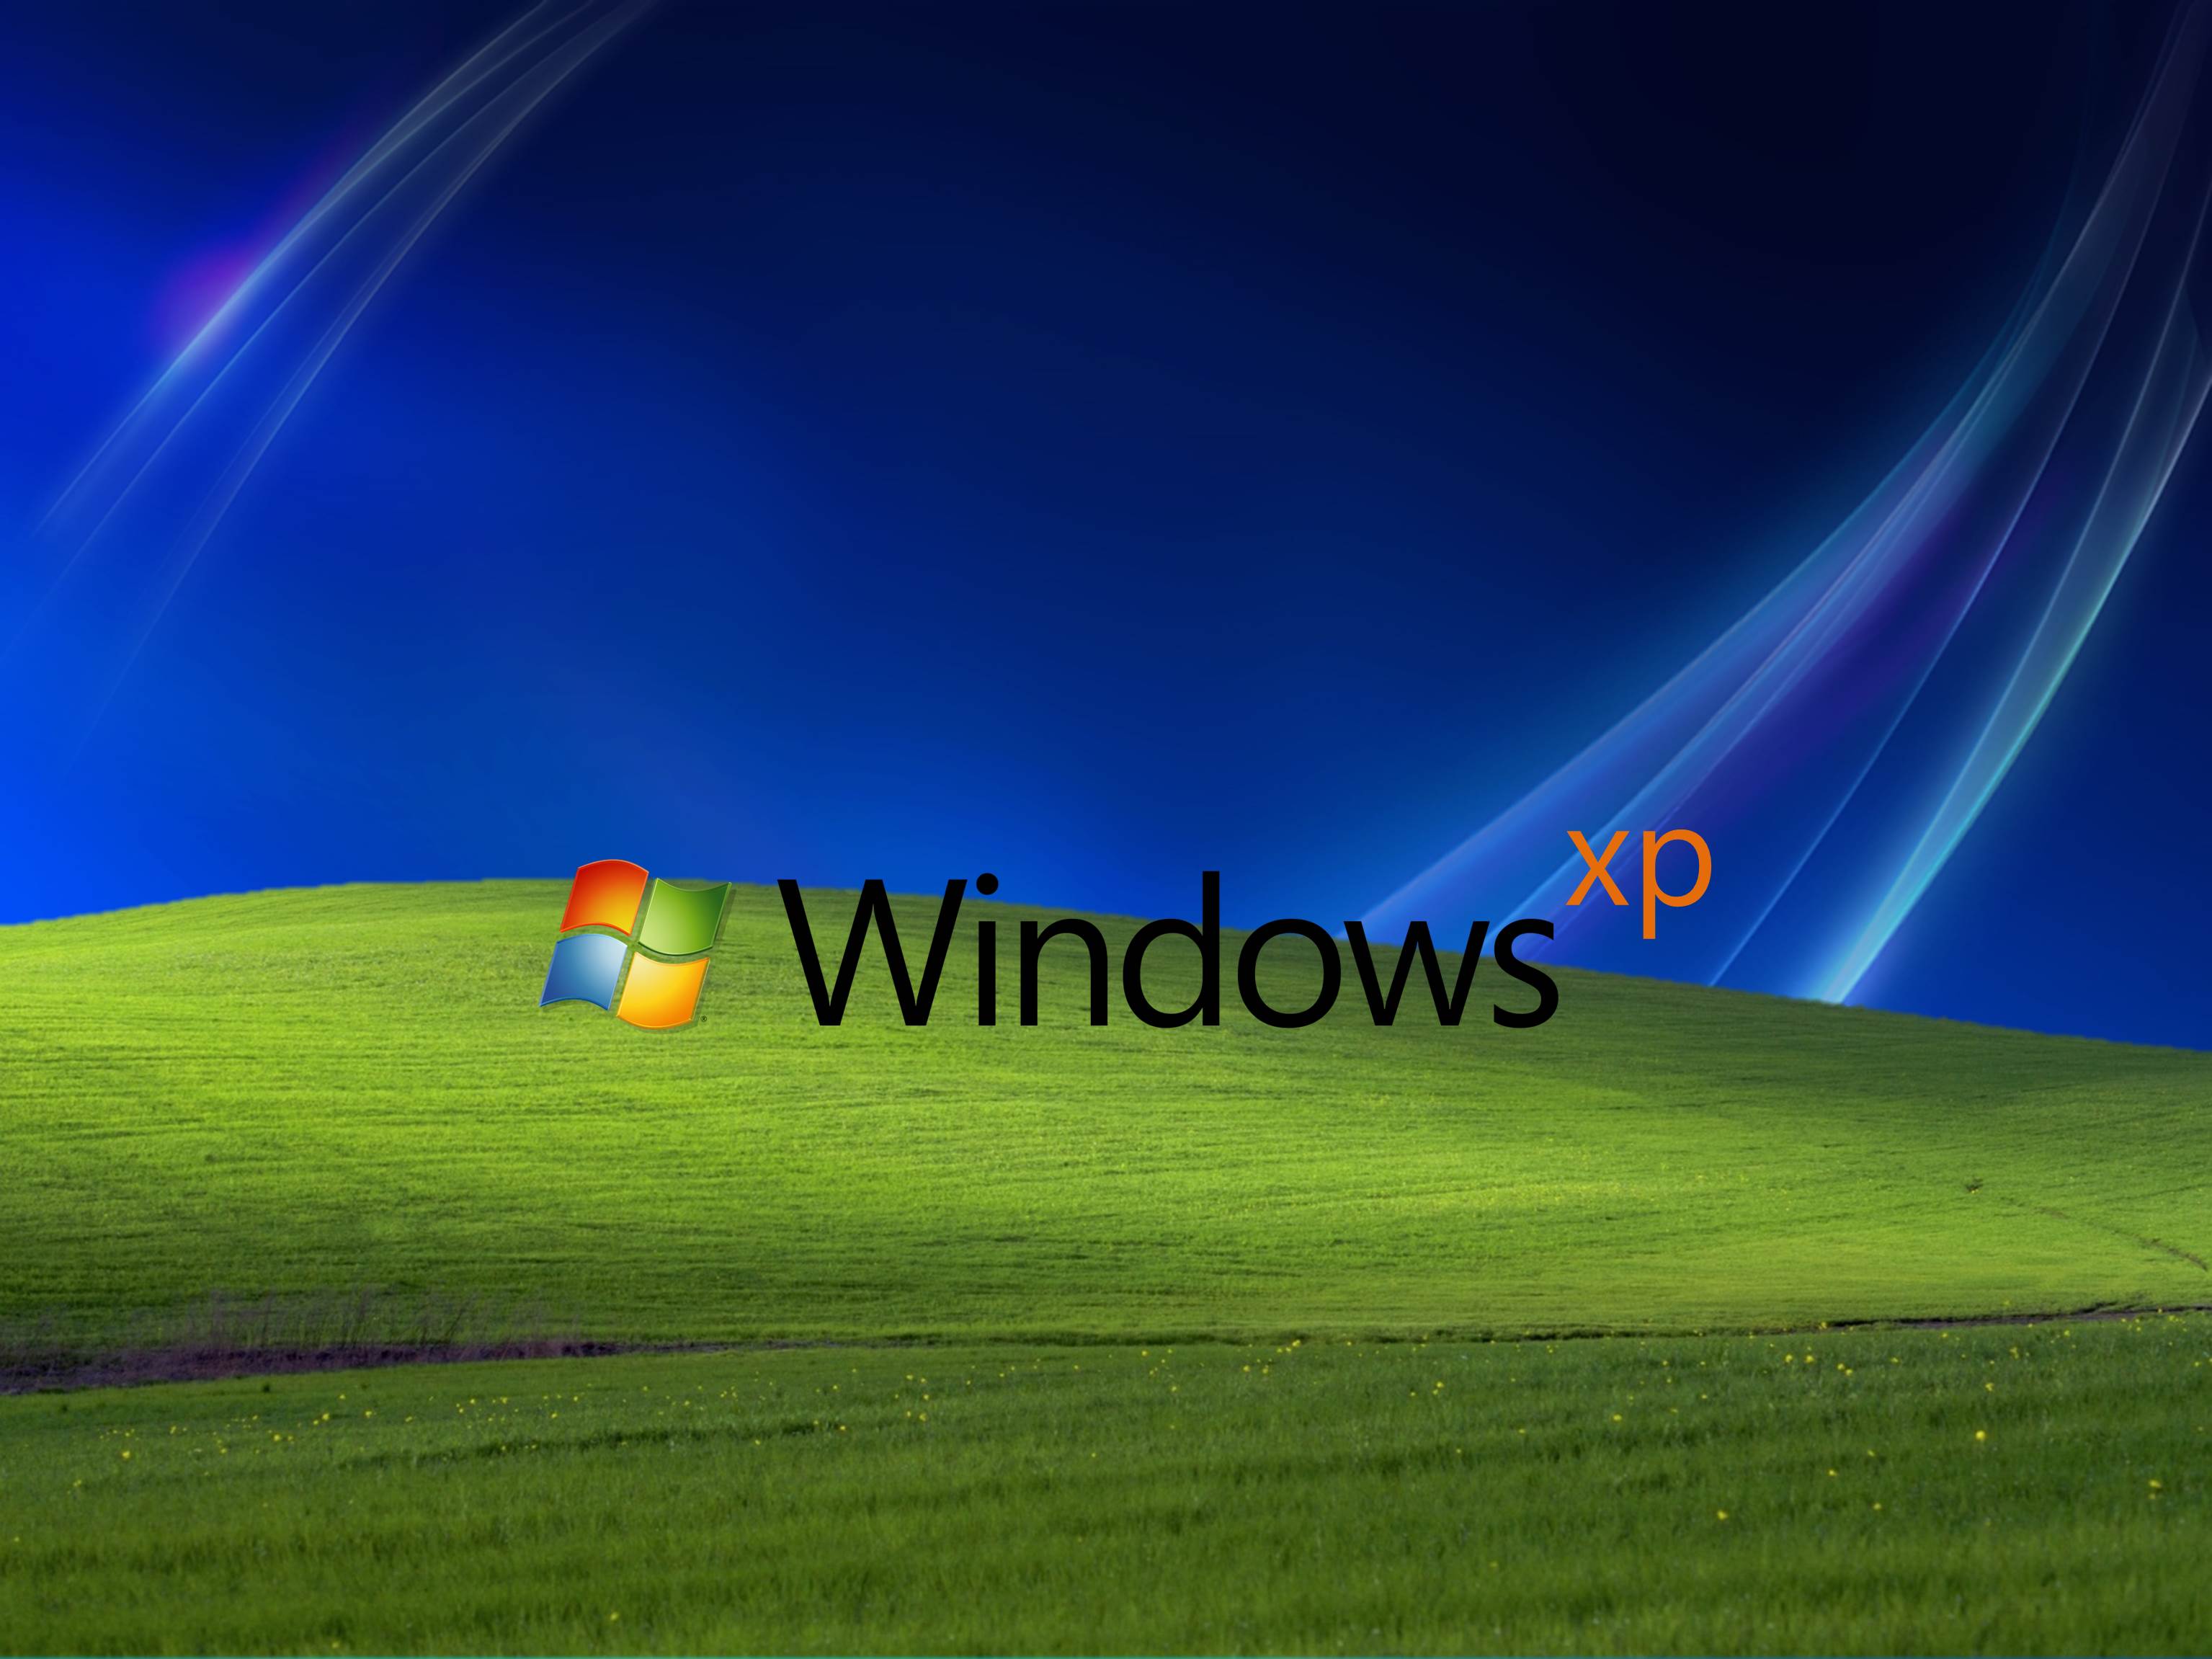 Beautiful Windows Wallpaper For Desktop Picpulp